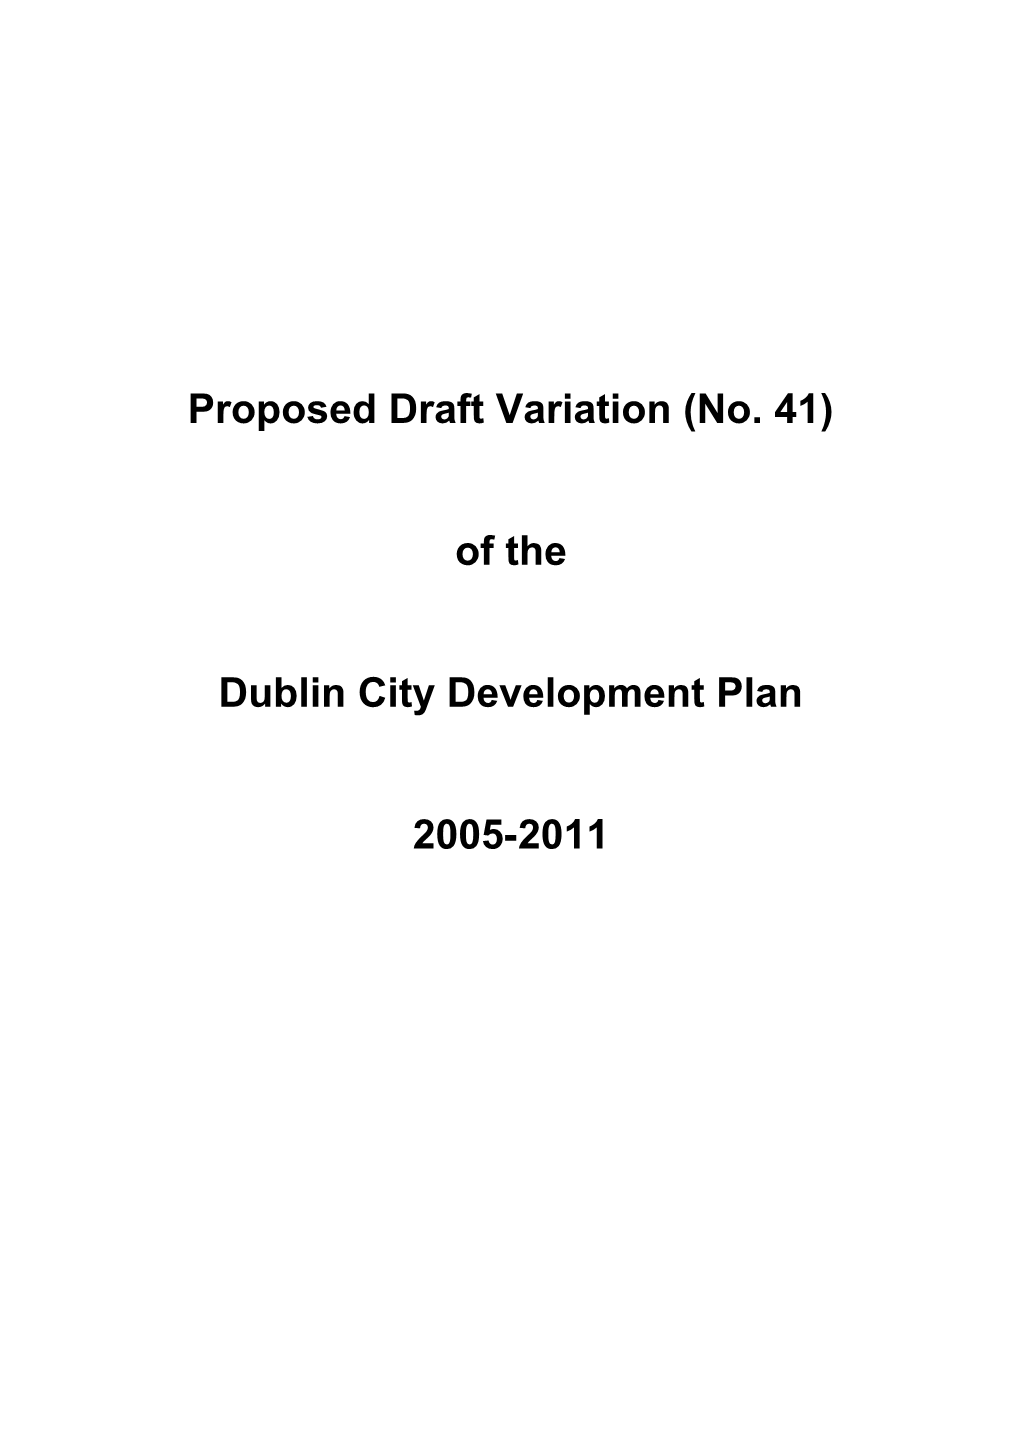 Proposed Variation of Dublin City Development Plan 2005-2011